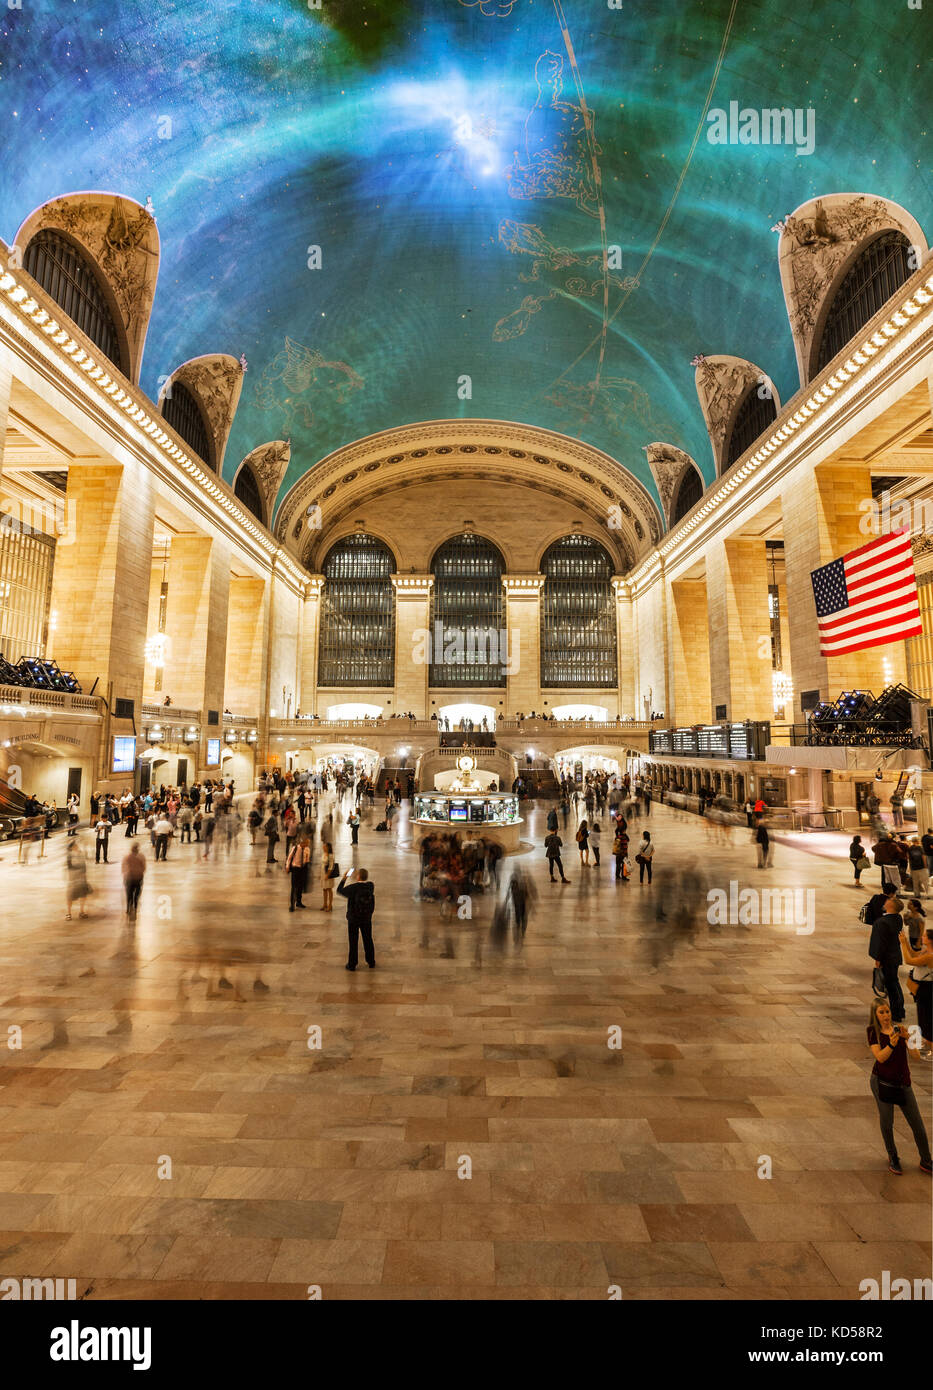 Grand Central Terminal interior, New York City Stock Photo